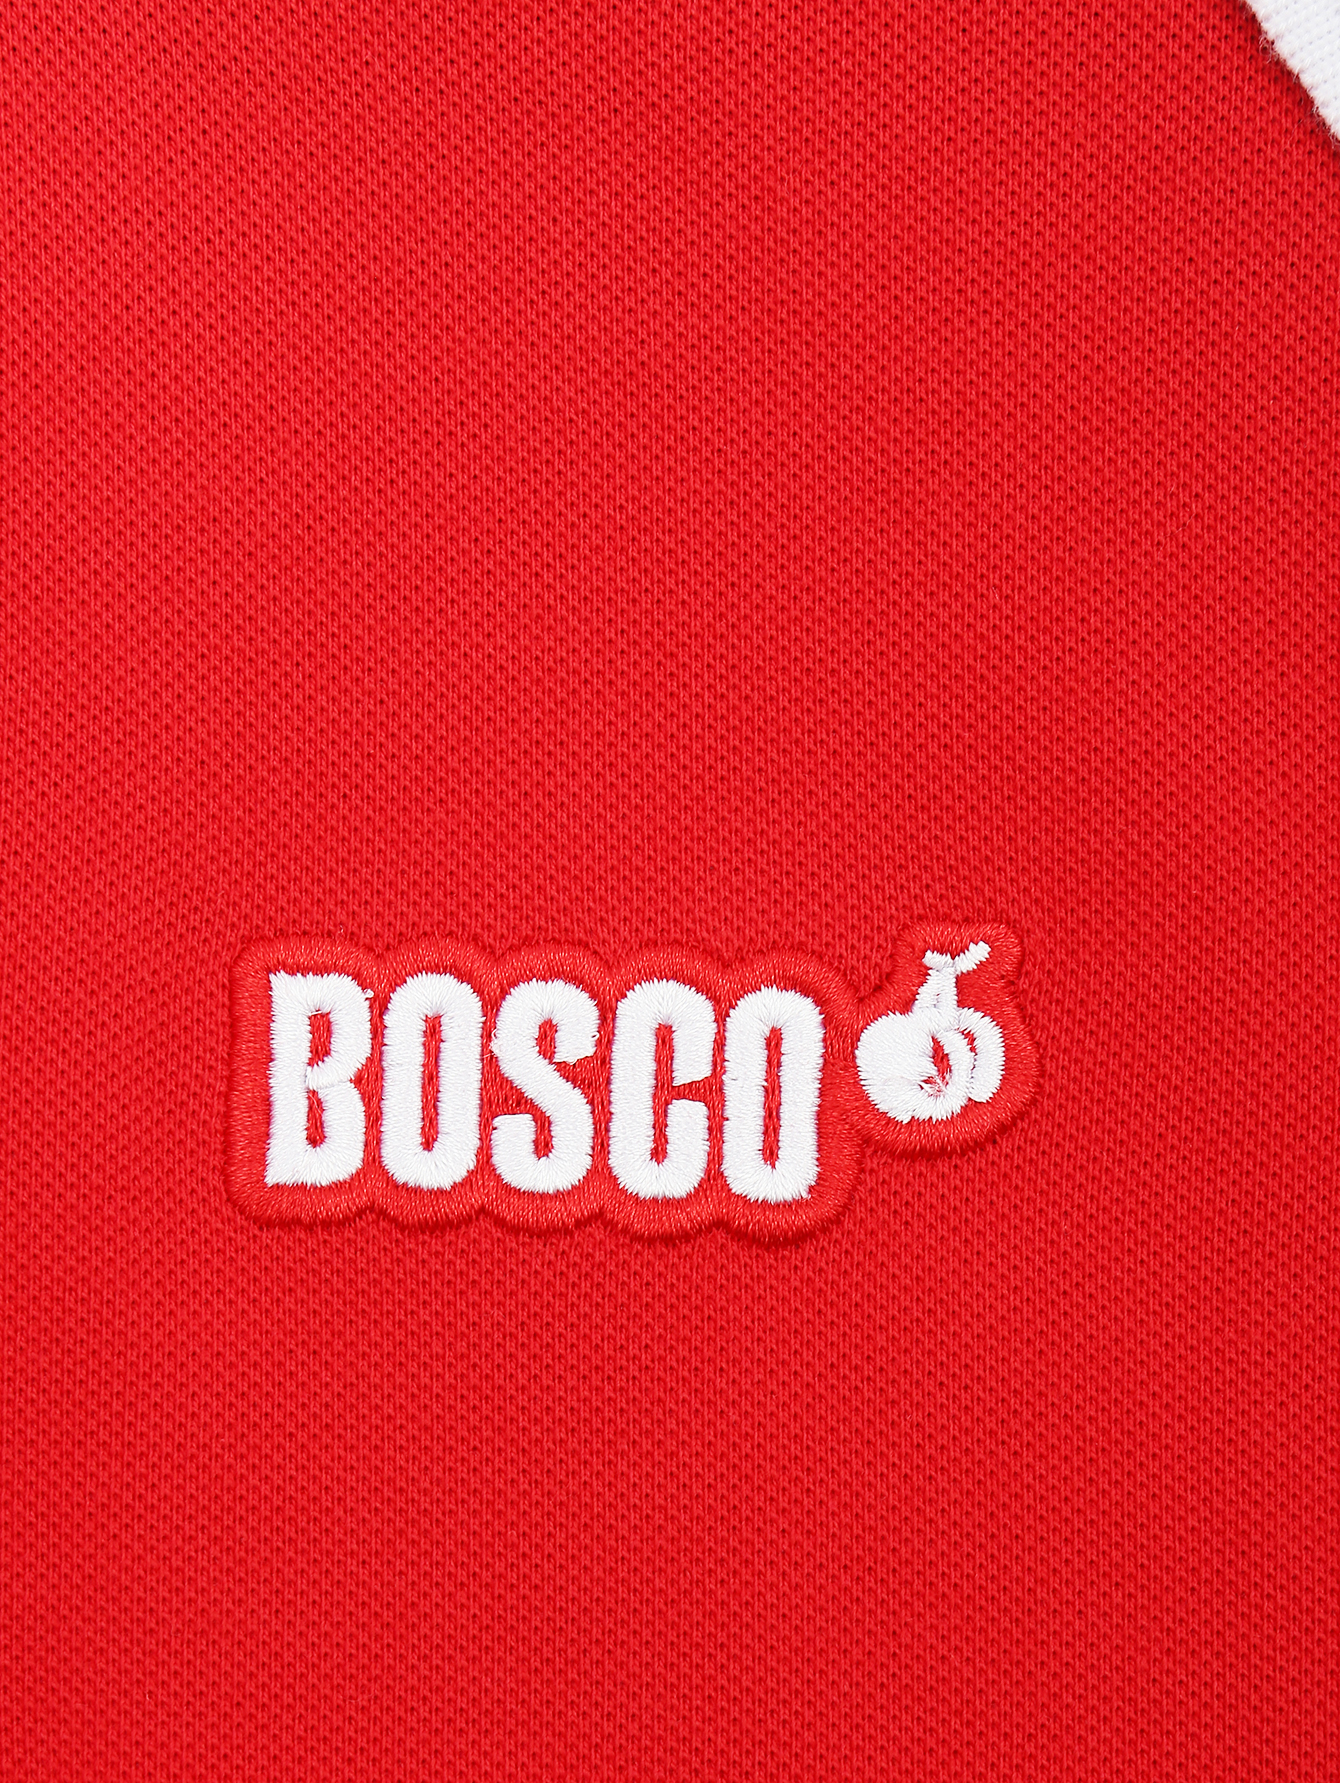 Боско сайт интернет магазин. Обои Bosco. Bosco логотип. Шапка Боско Фреш. Bosco Sport футболка женская.